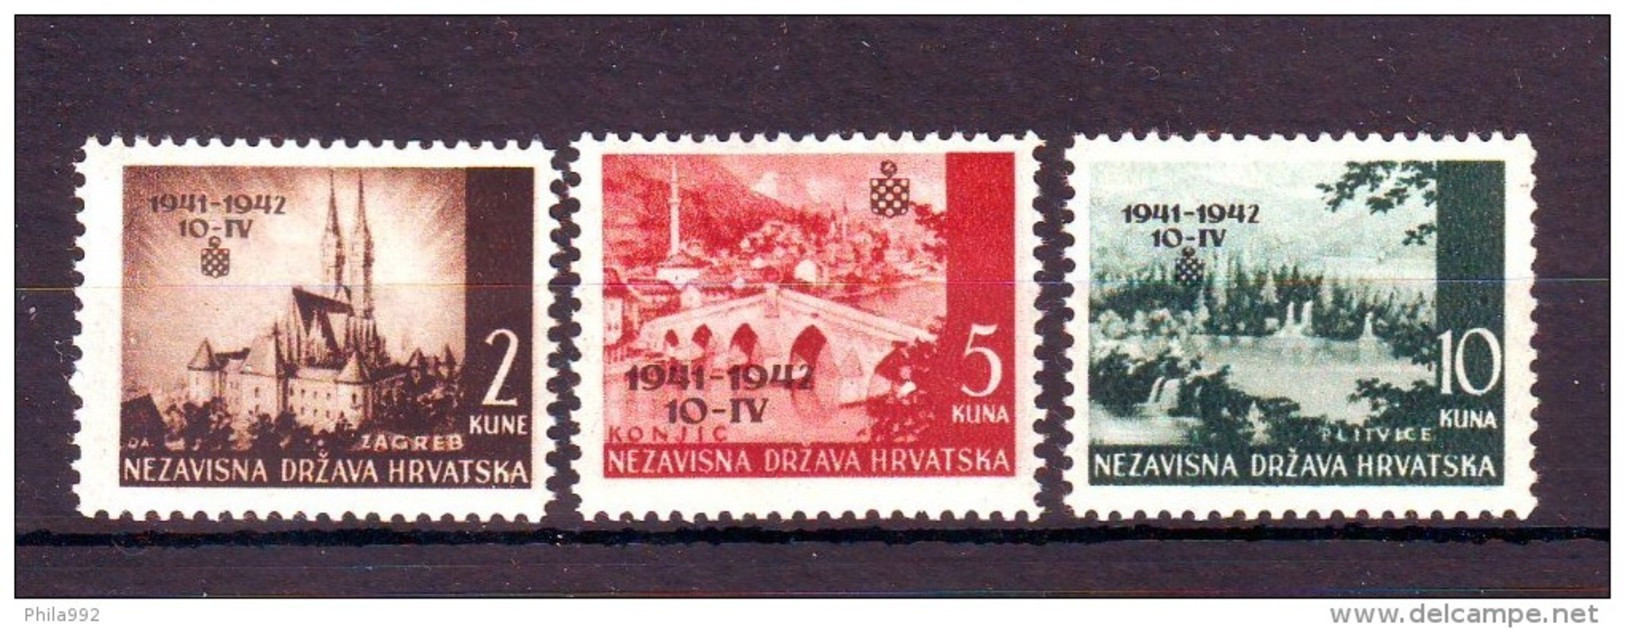 Croatia NDH 1942 Y Independence Anniversary Mi No 78-80 MNH - Croatia